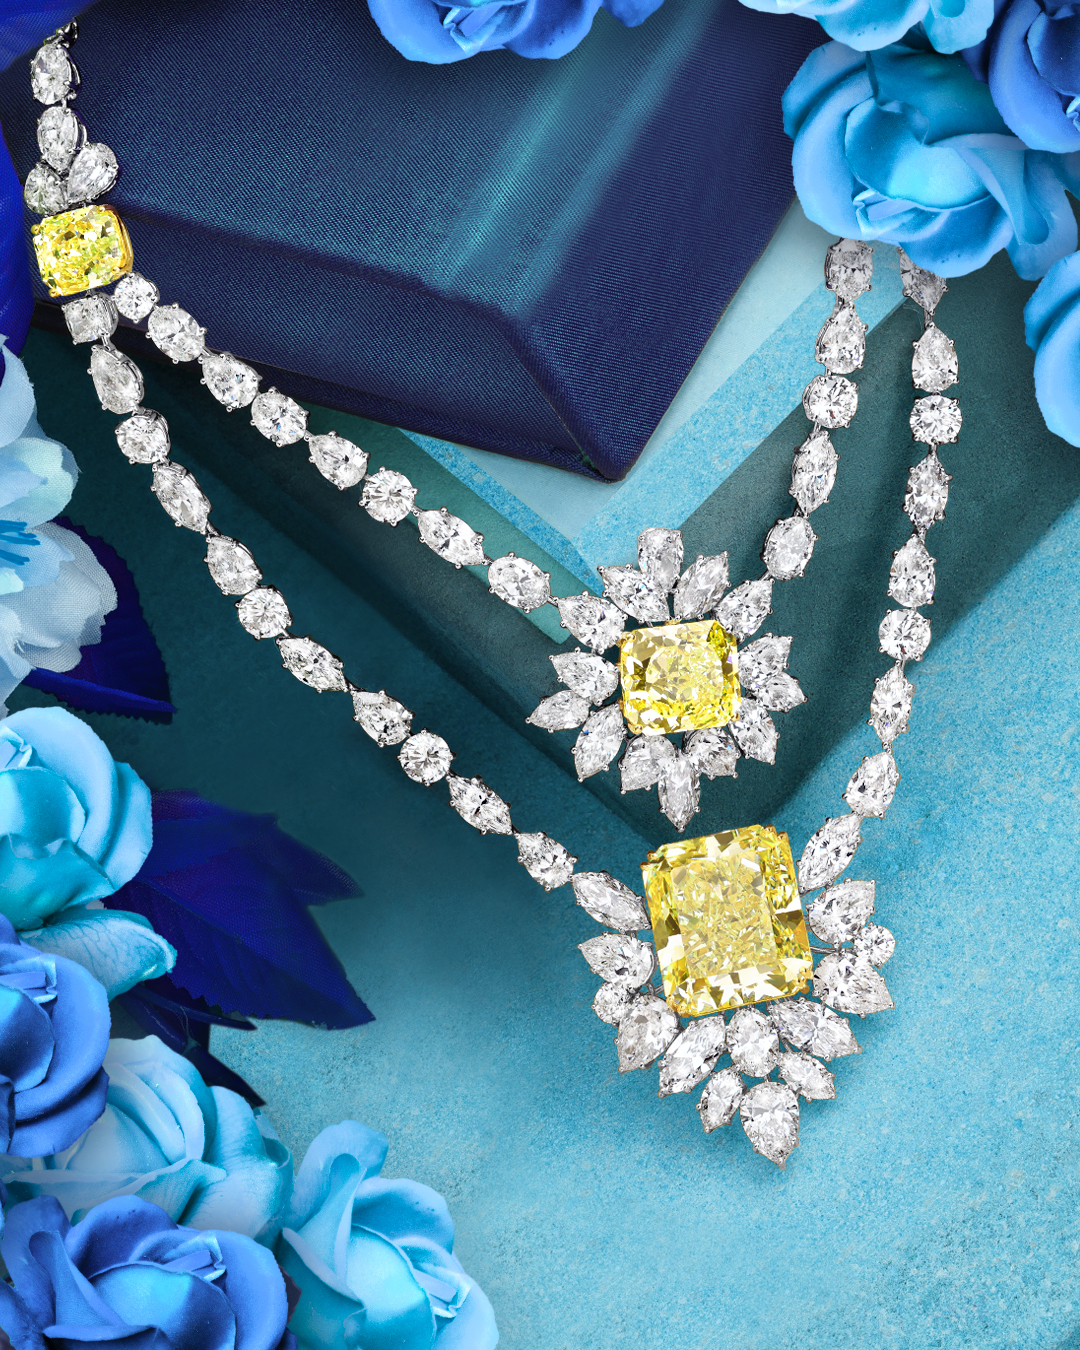 celia fabbri photography high jewellery chatila jewels yellow diamonds necklace blue tone